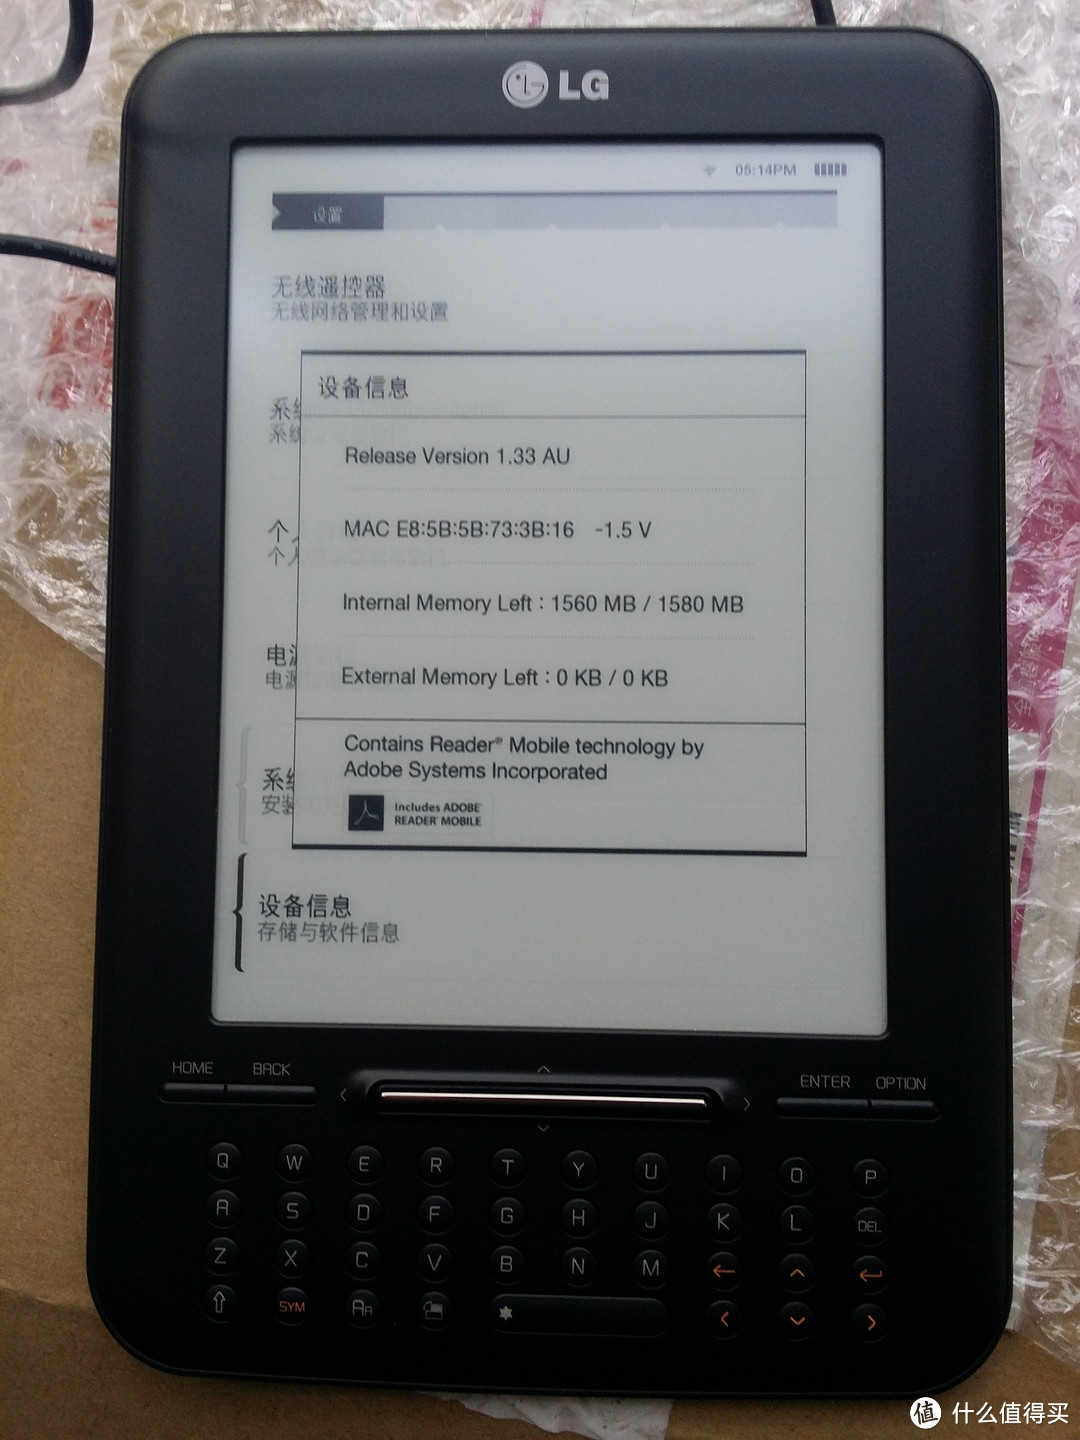 LG R6020BQ电纸书开箱简评